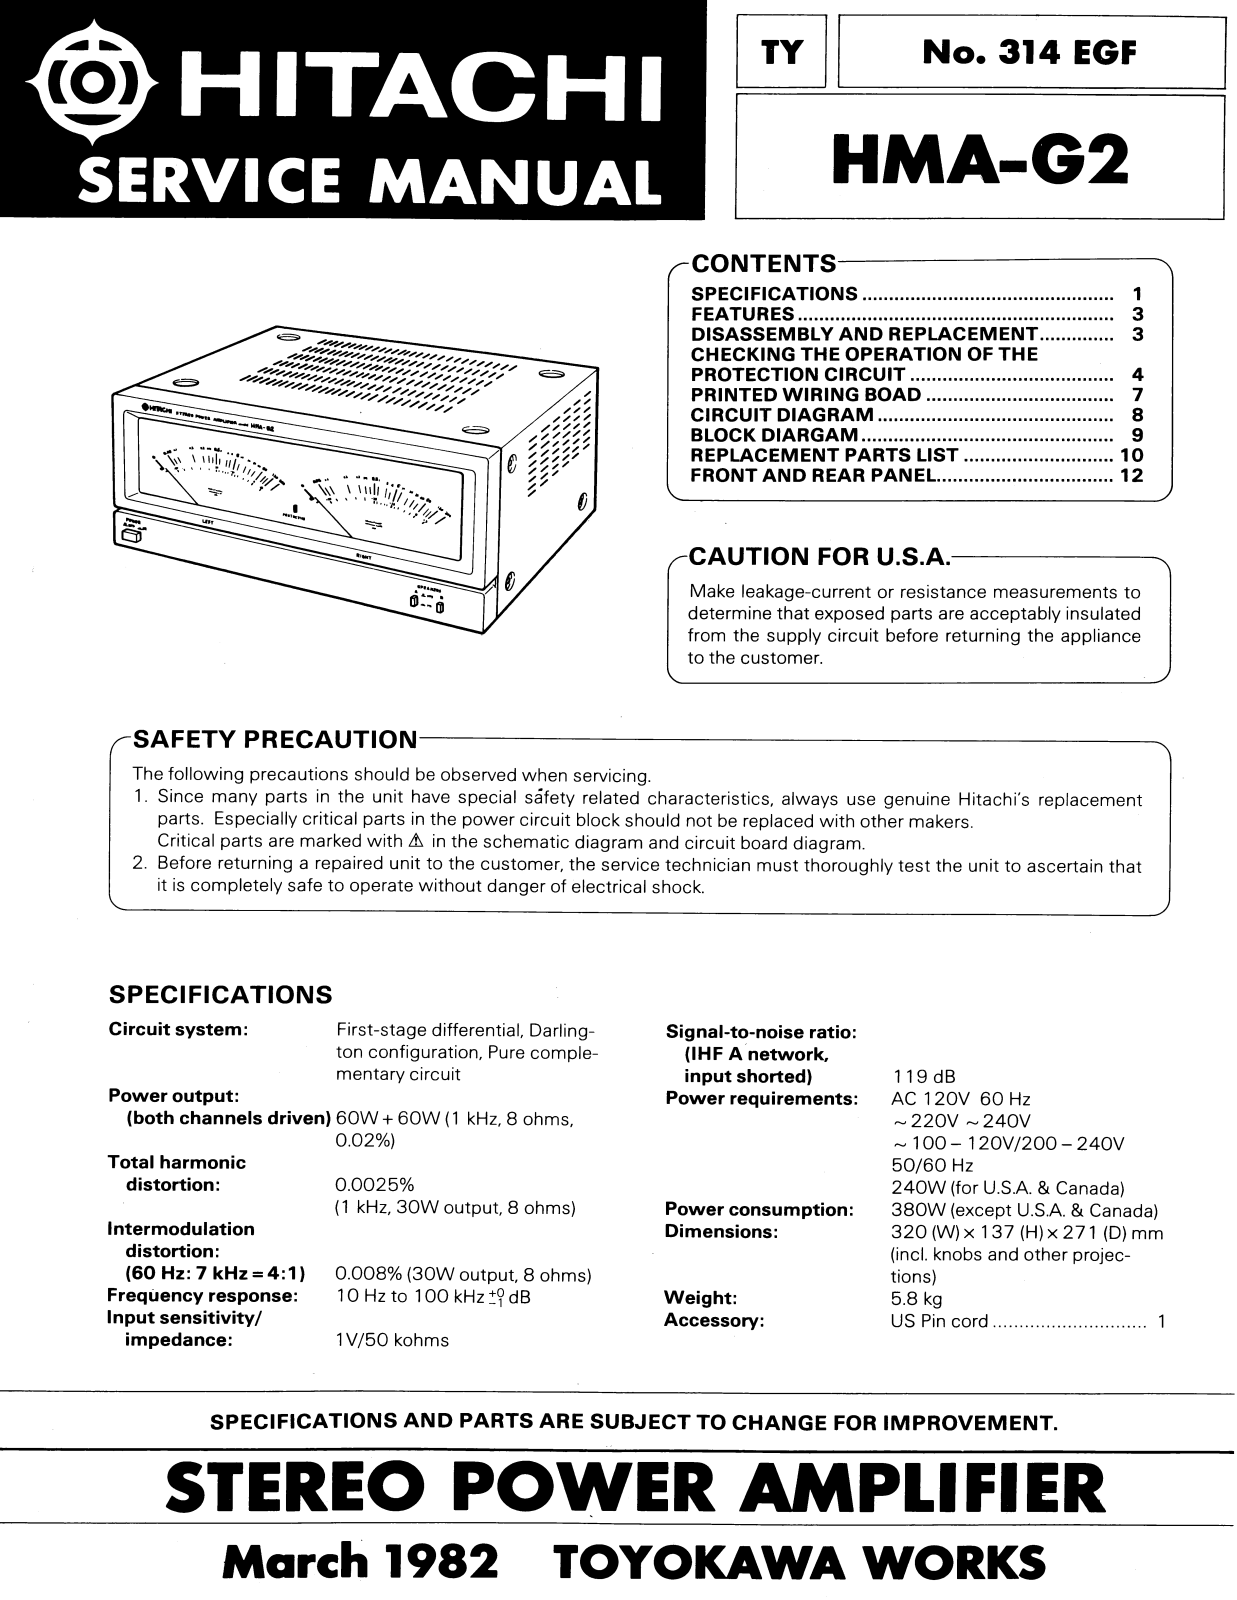 Hitachi HMA-G2 Service Manual